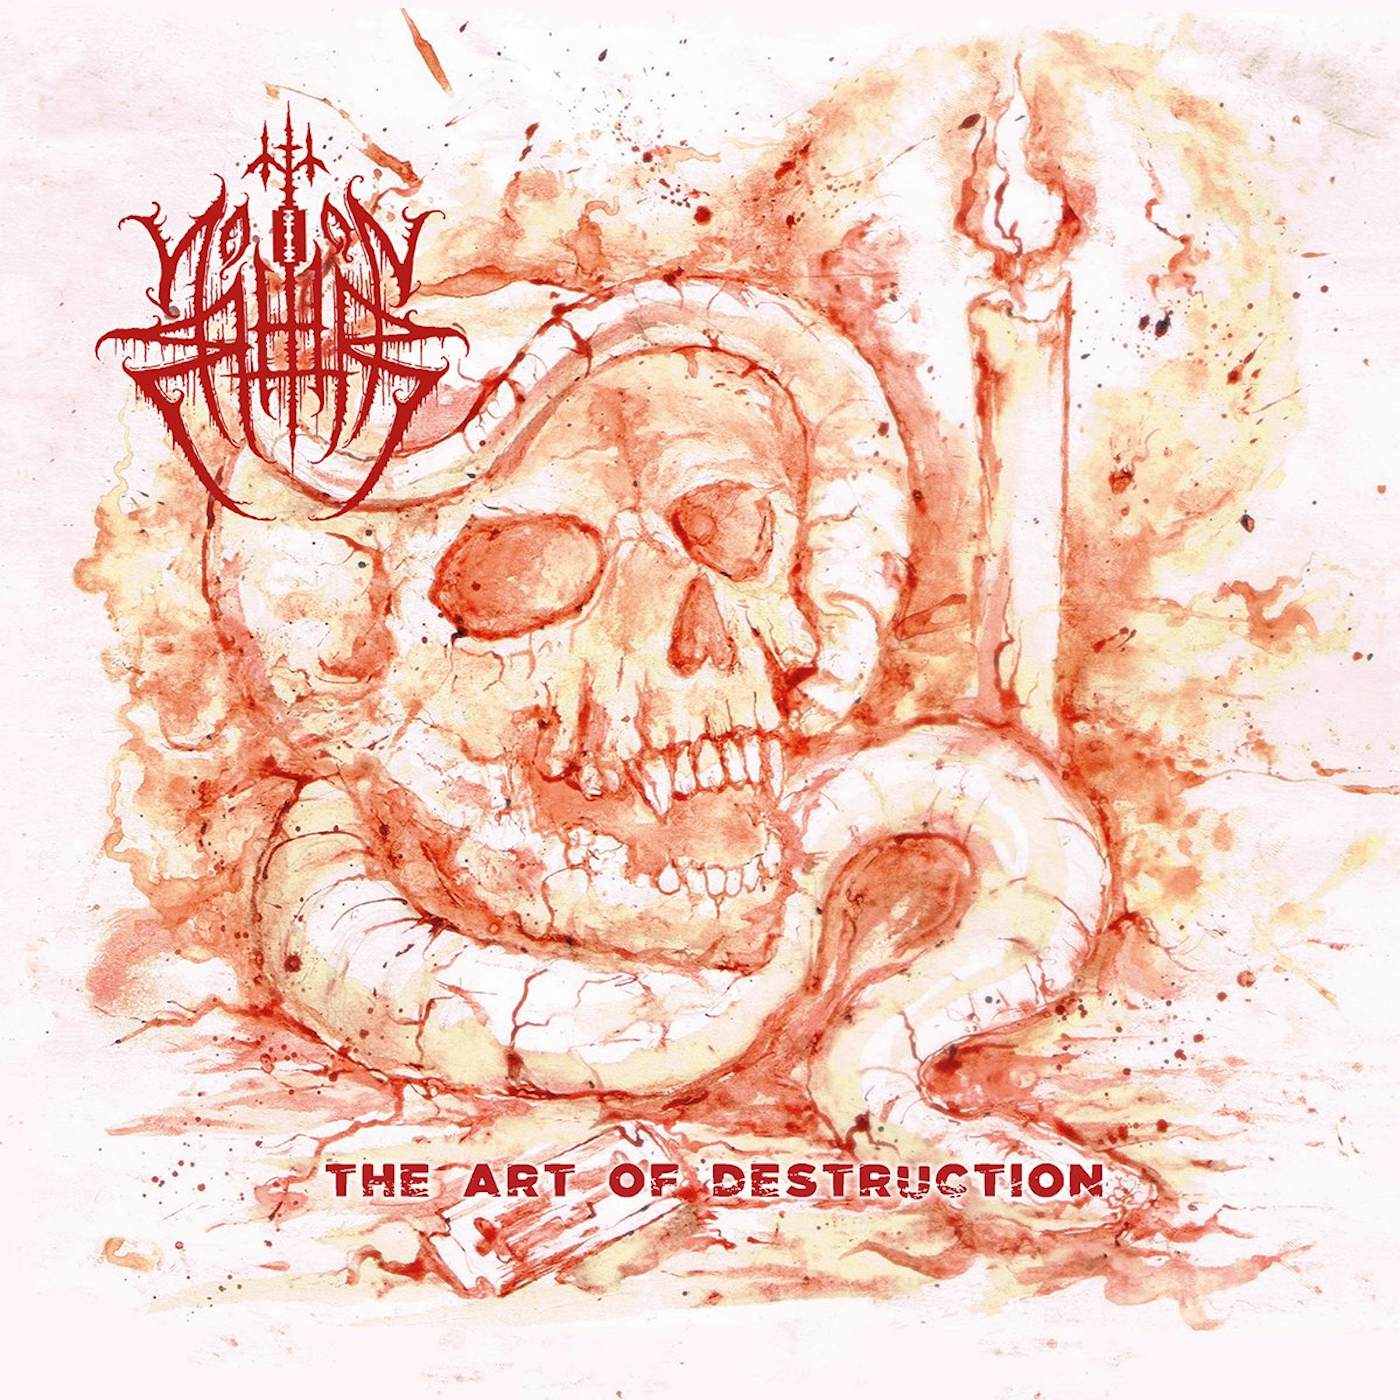 Northorn "The Art Of Destruction (Digipak)" CD